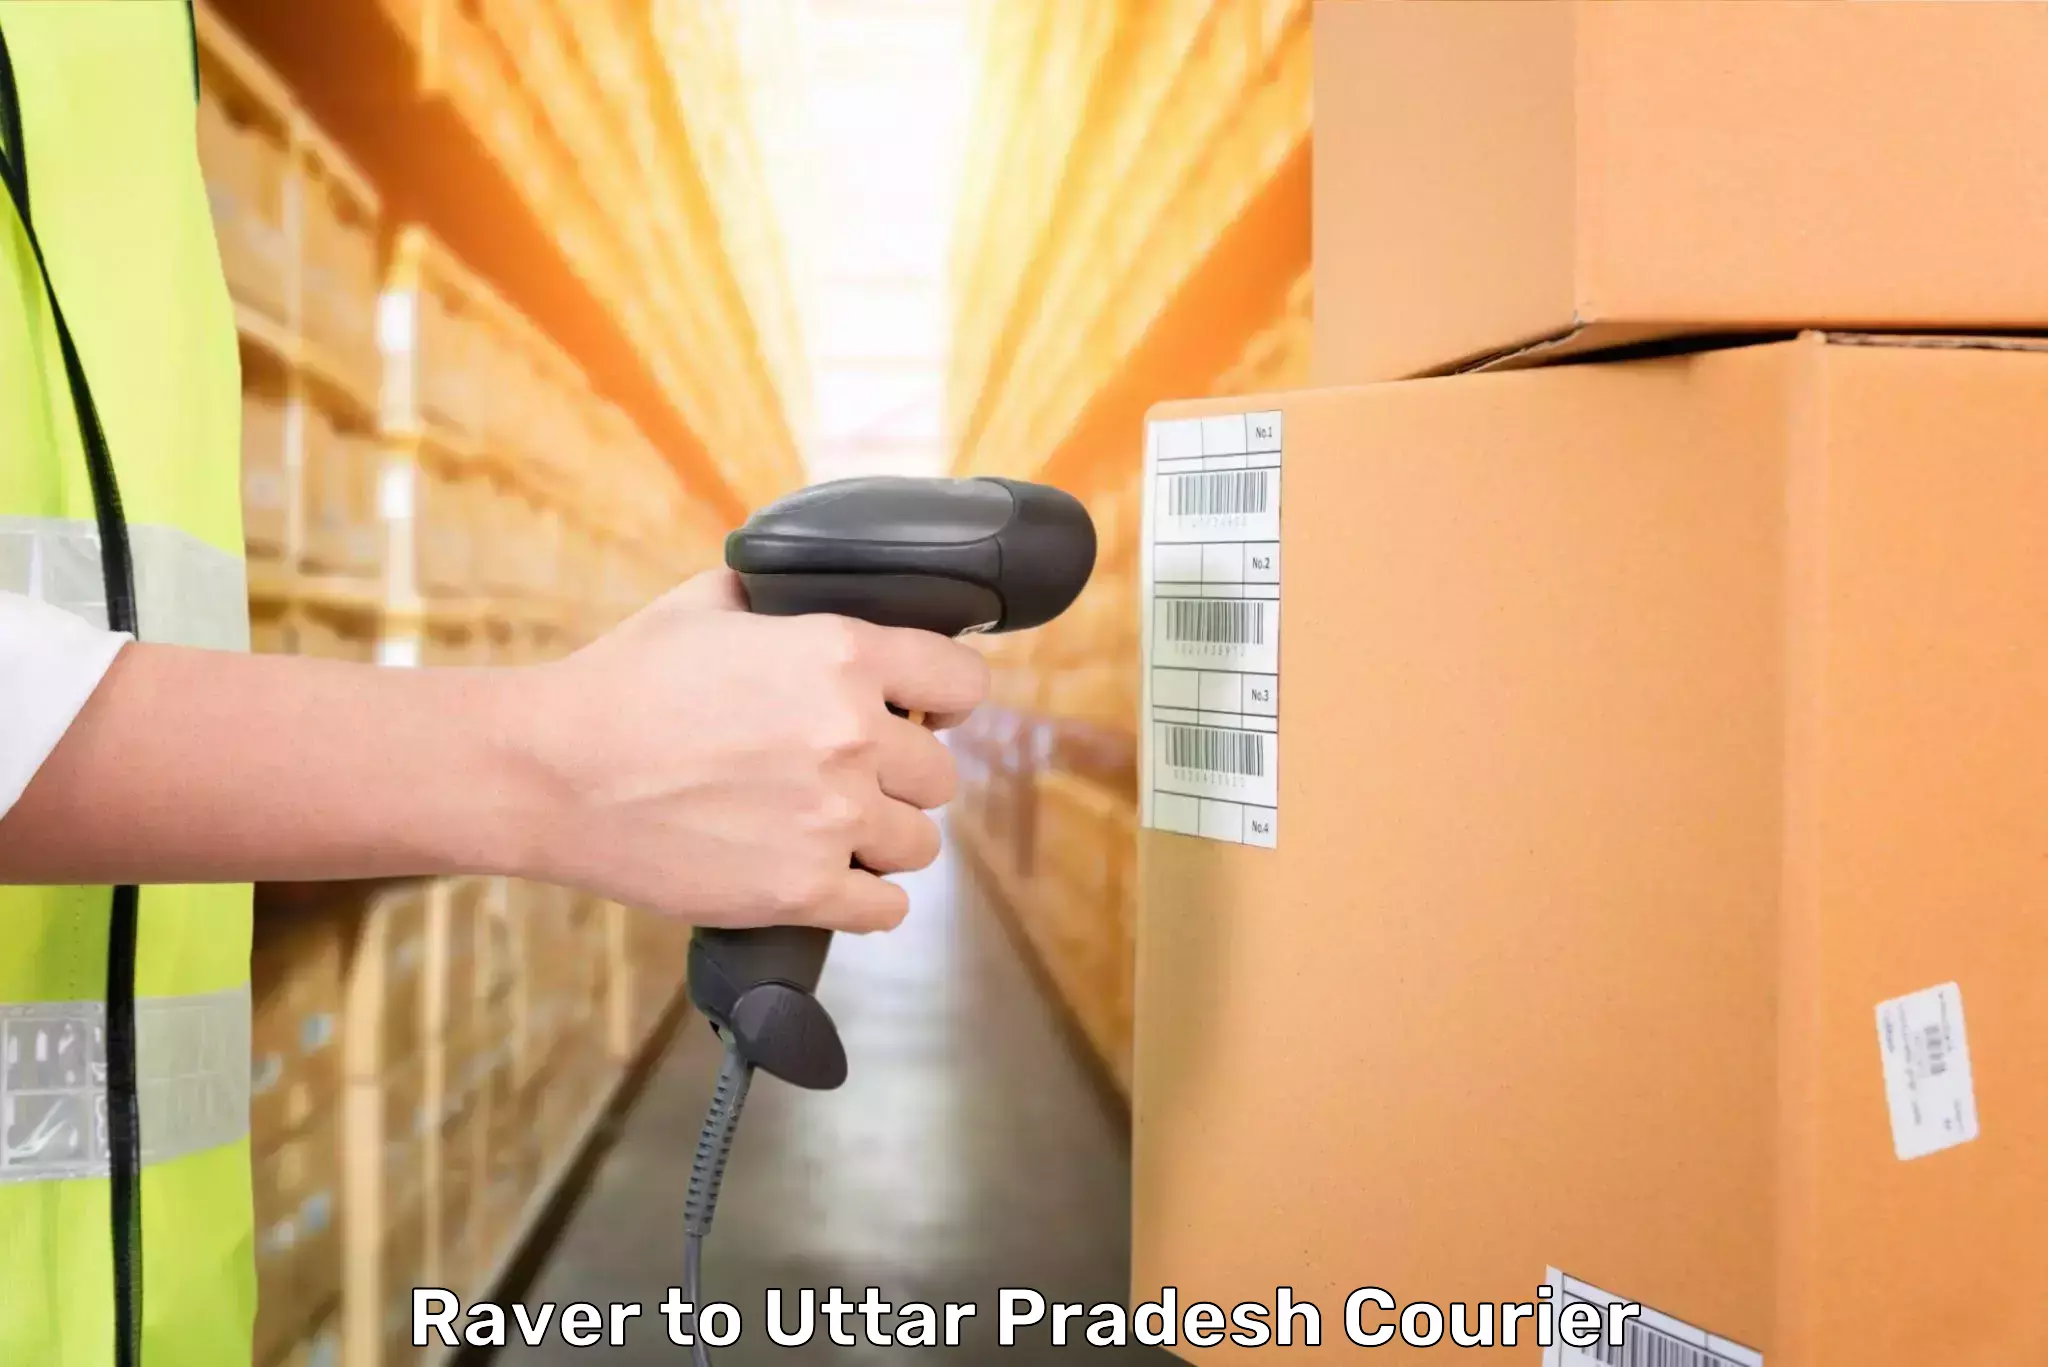 Luggage shipment specialists Raver to Uttar Pradesh